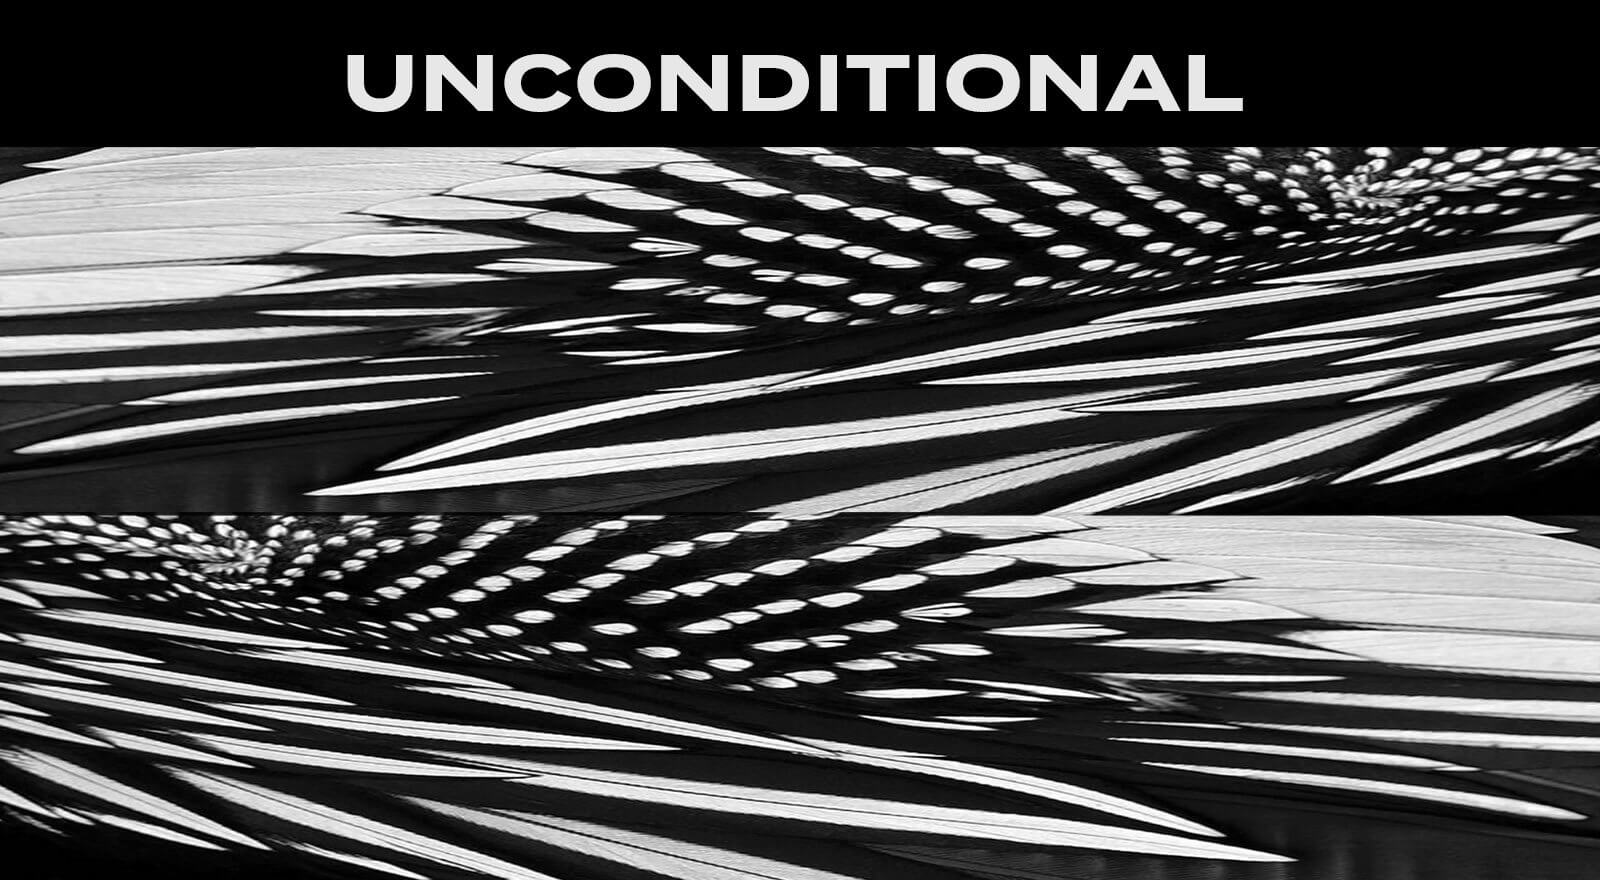 D/Luca Feather Black Unconditional - Artwork